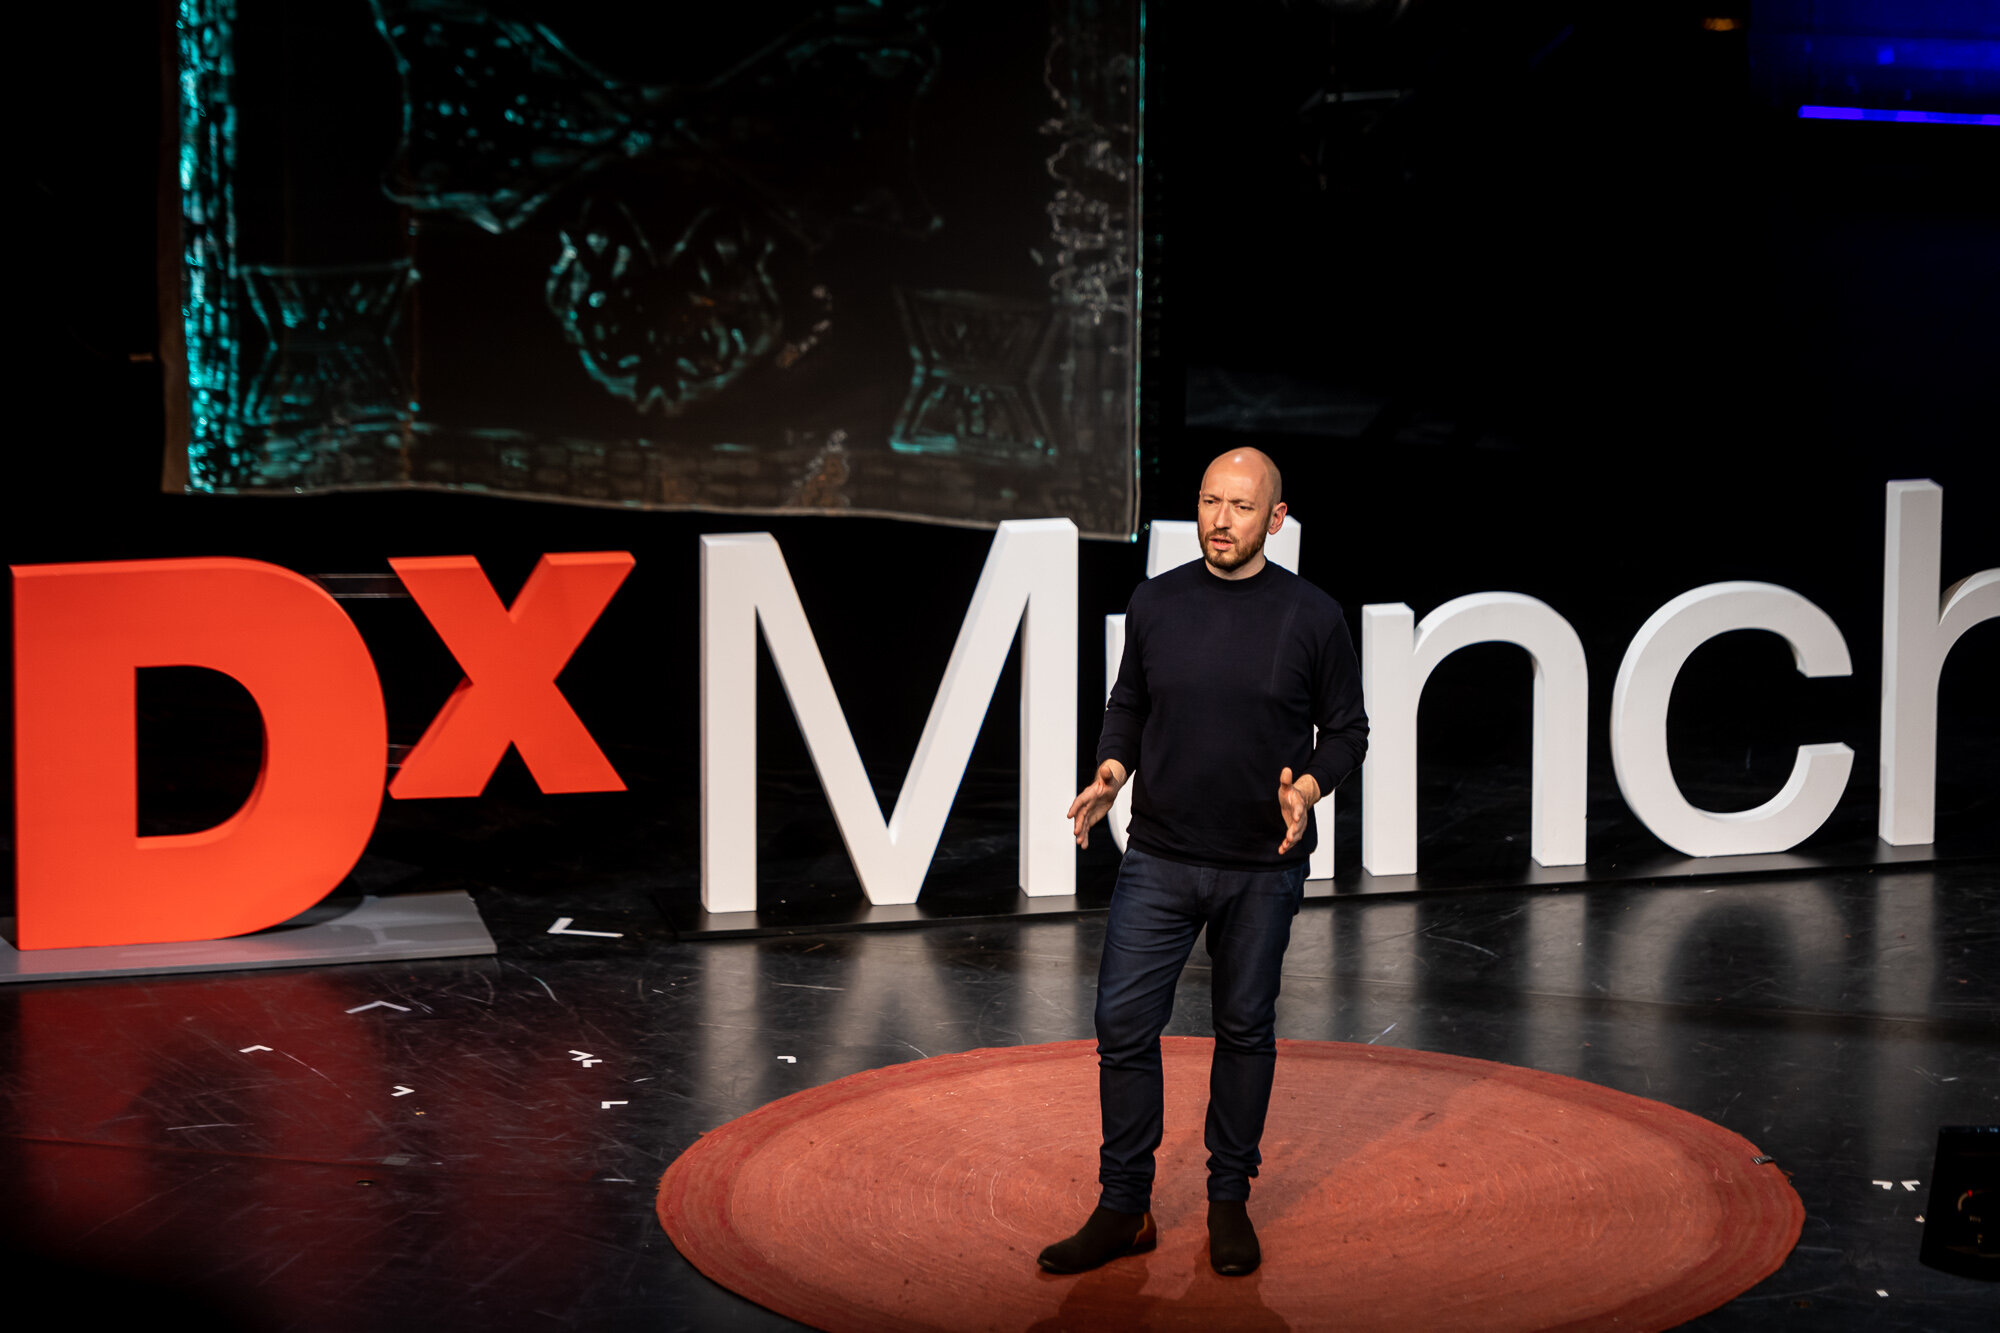 TEDX_2019-191110-113.jpg